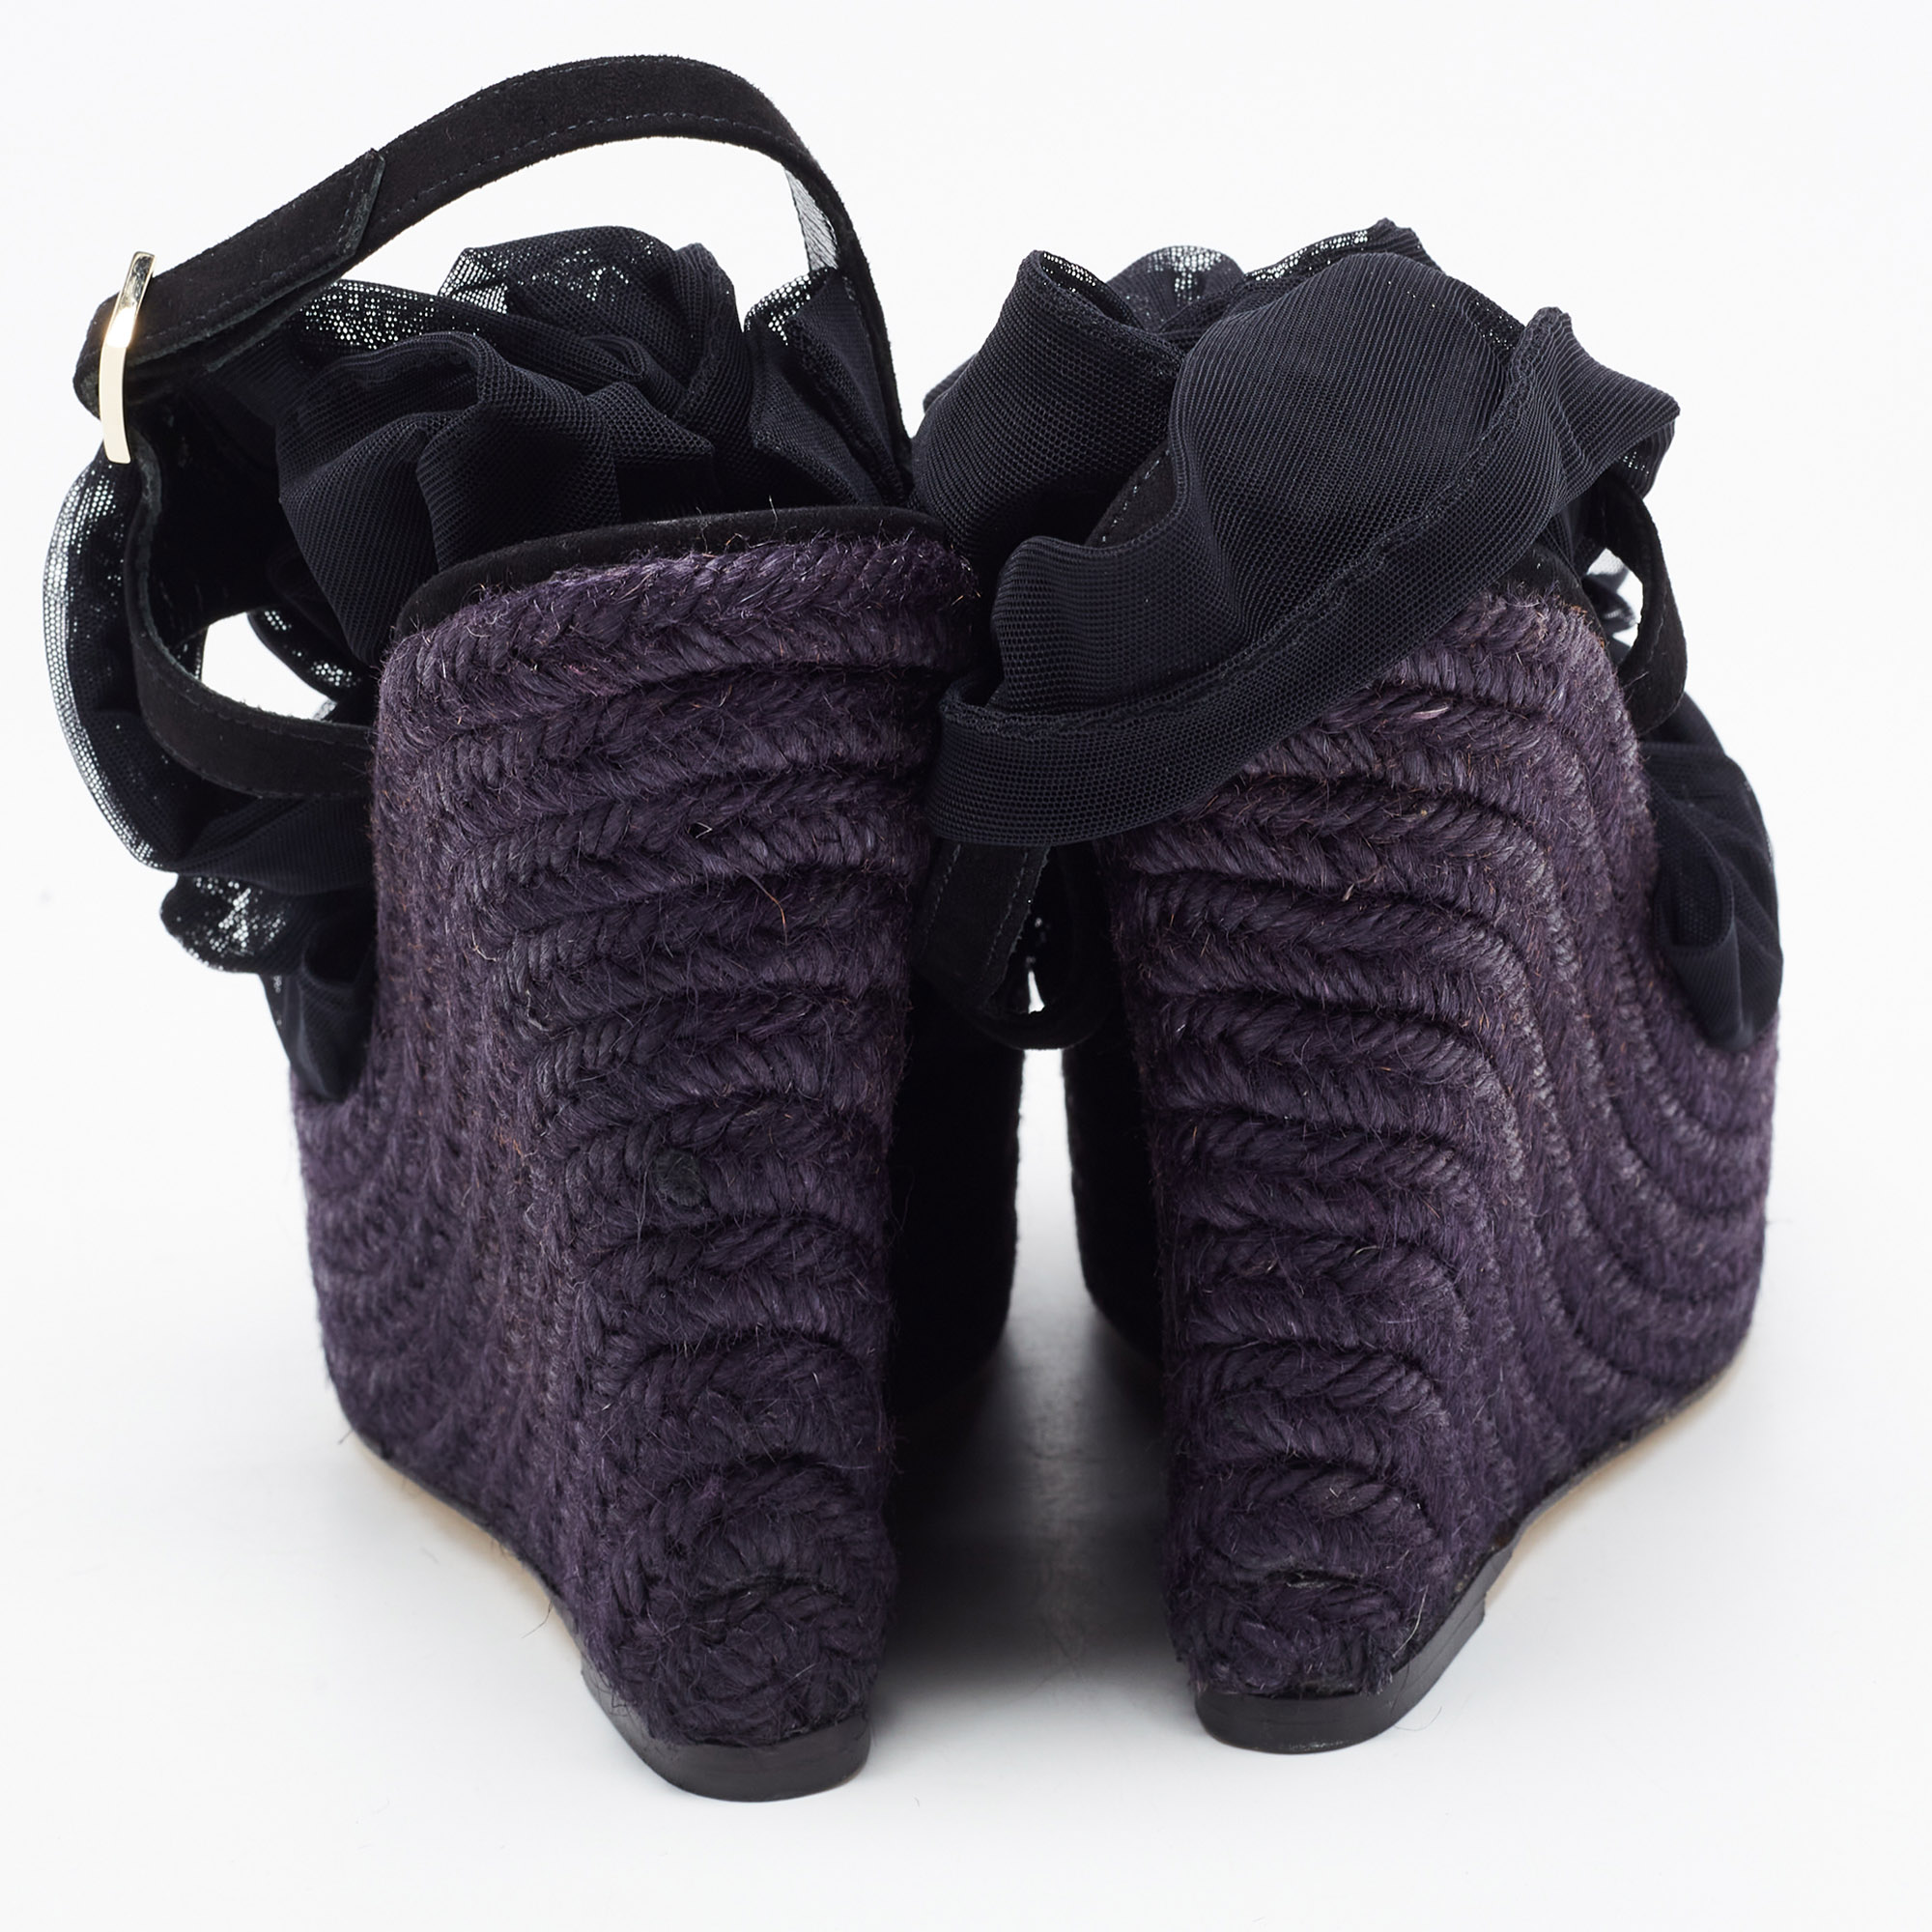 Fendi Black Mesh Fabric And Suede Wedge Platform Espadrille Ankle Strap Sandals Size 36.5